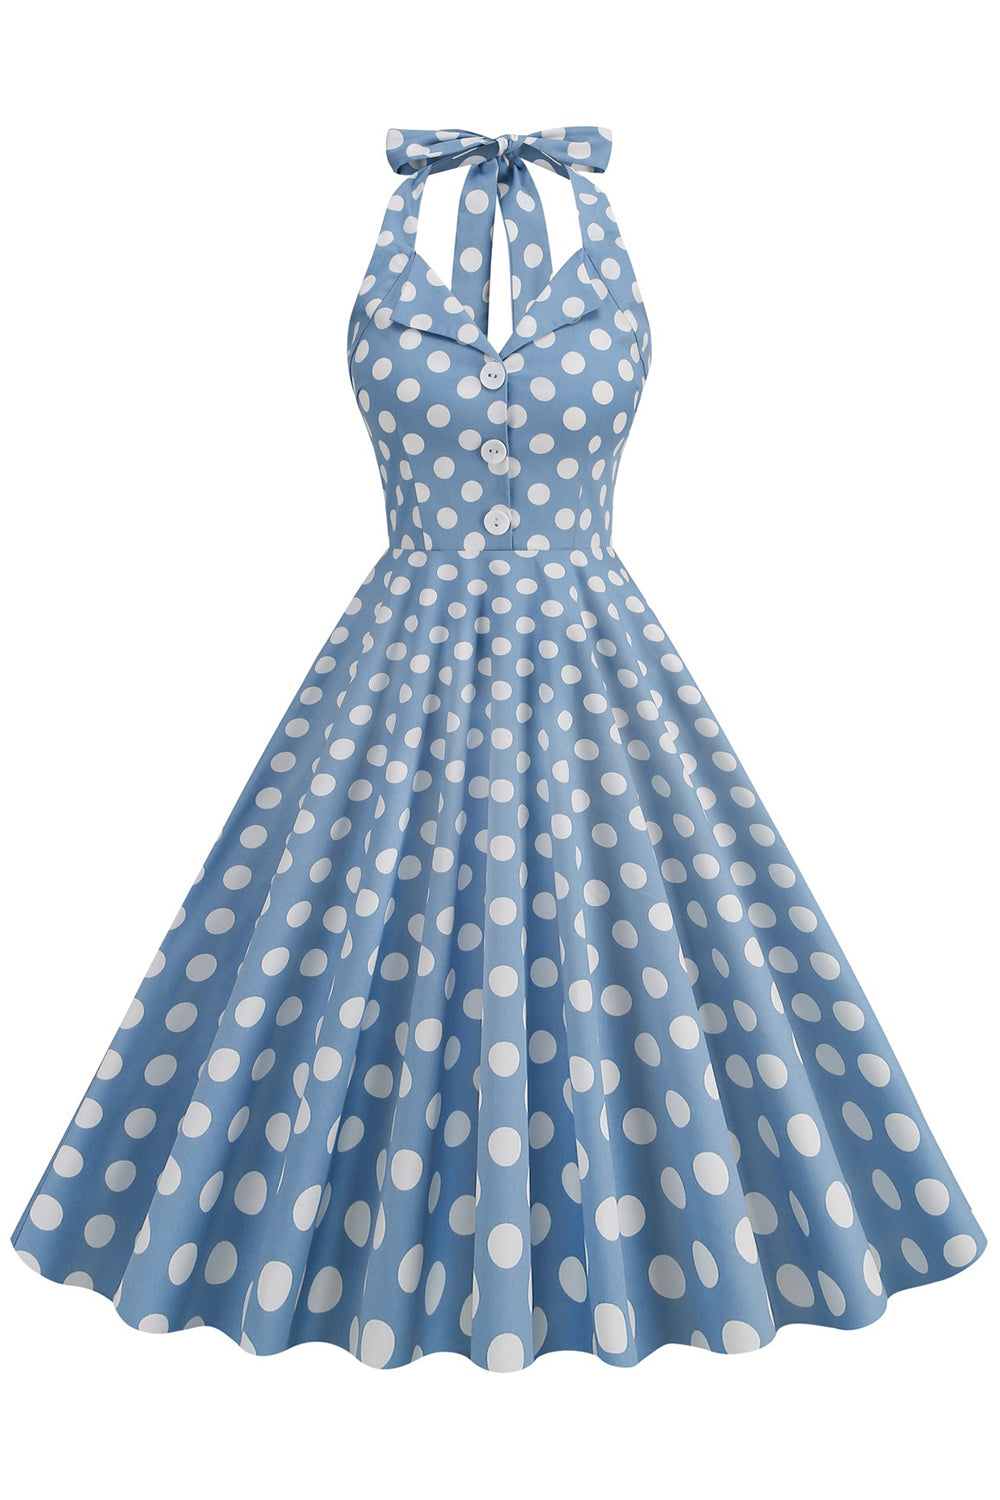 1950s Vestido Pontos de Polka Azul